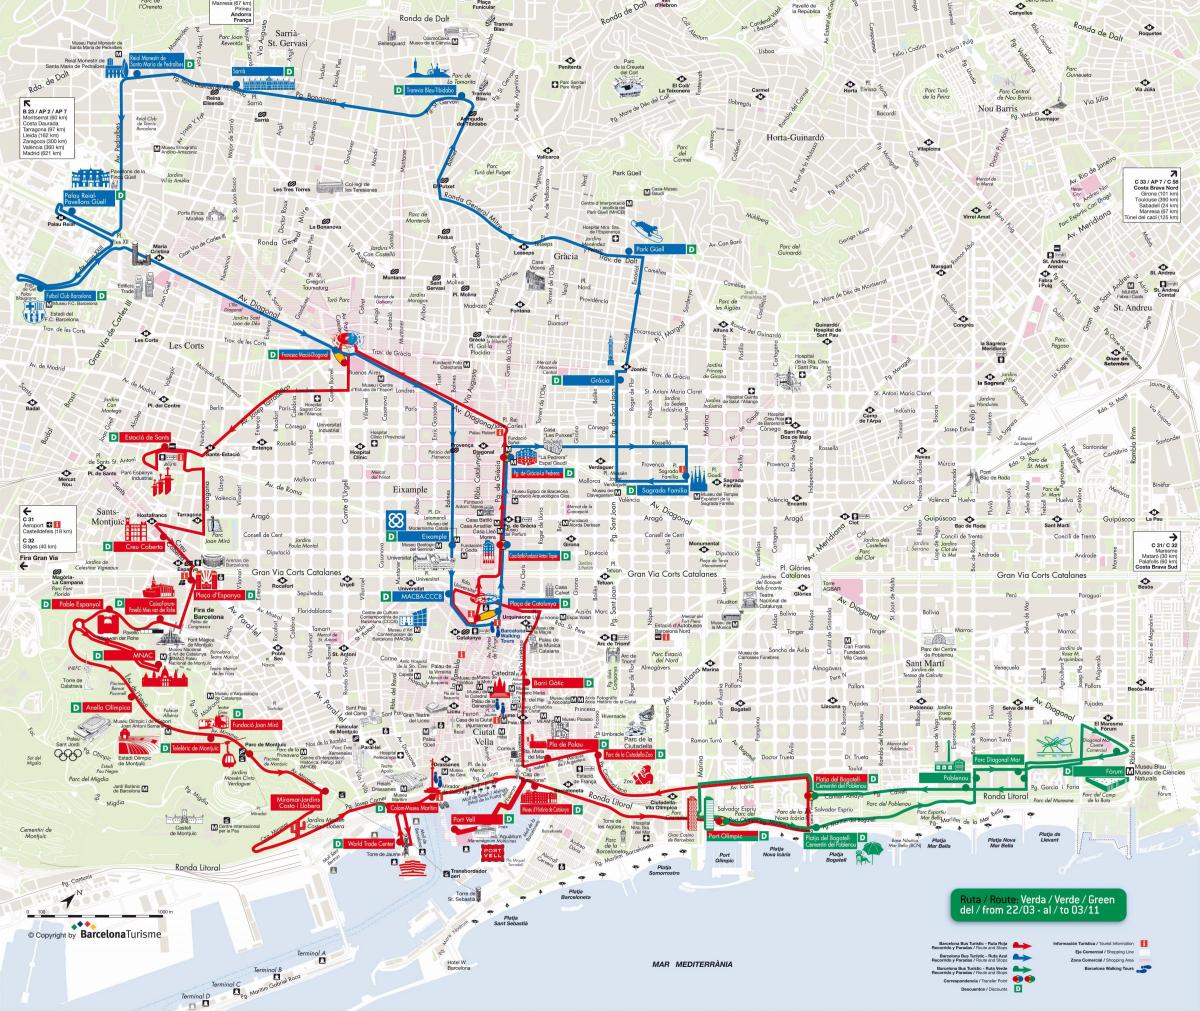 von barcelona bus turistic red line map